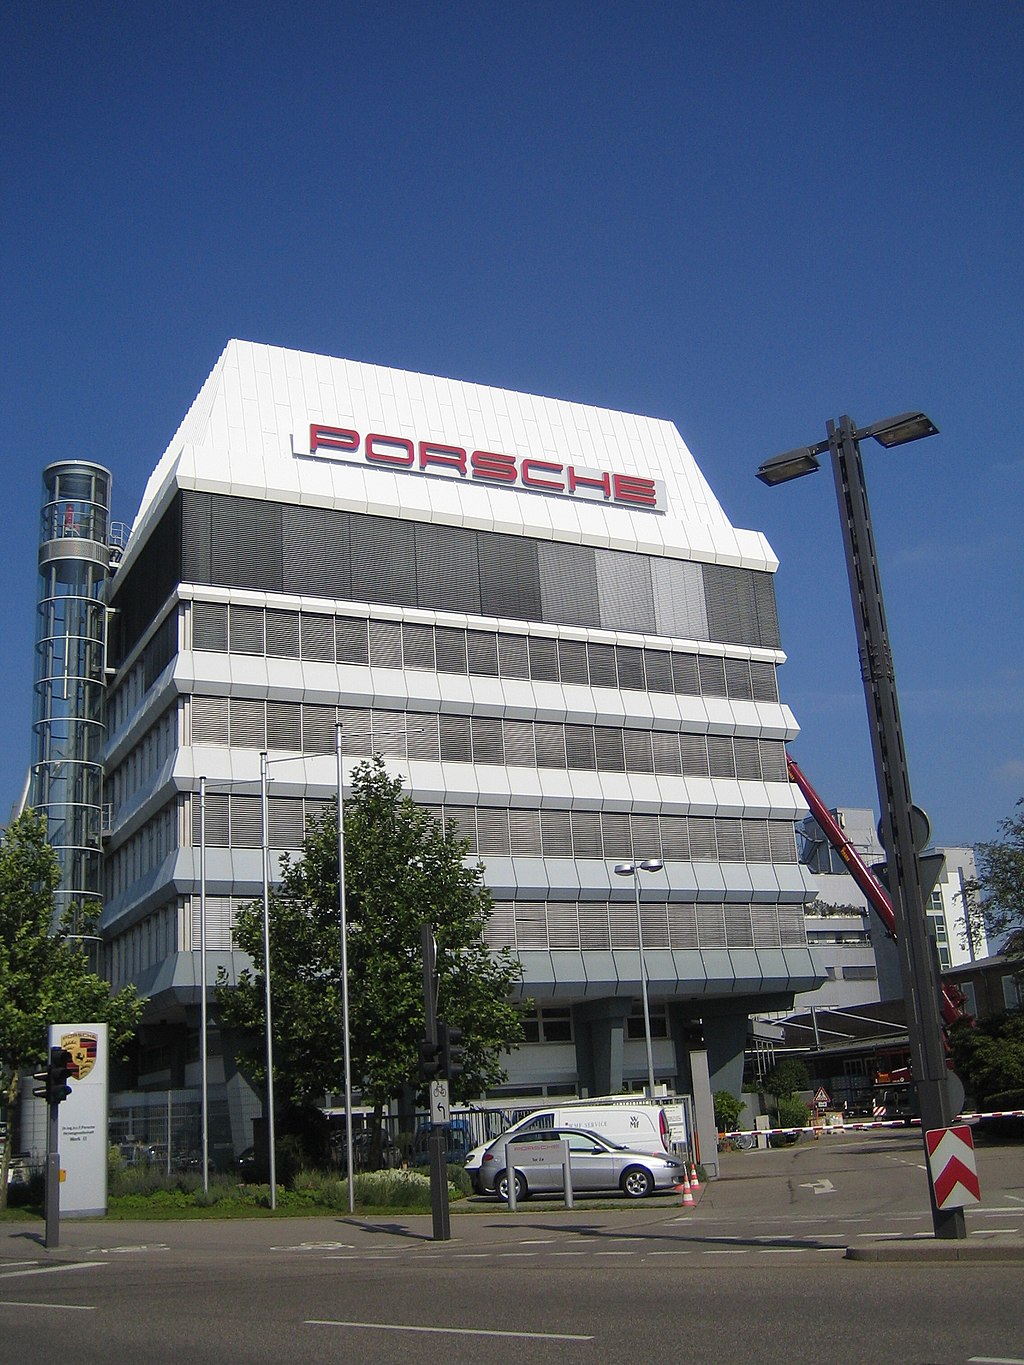 Sede central de la empresa de automóviles de lujo Porsche en Stuttgart, Alemania. Foto: Str1ke/CC BY 2.0, via Wikimedia Commons.